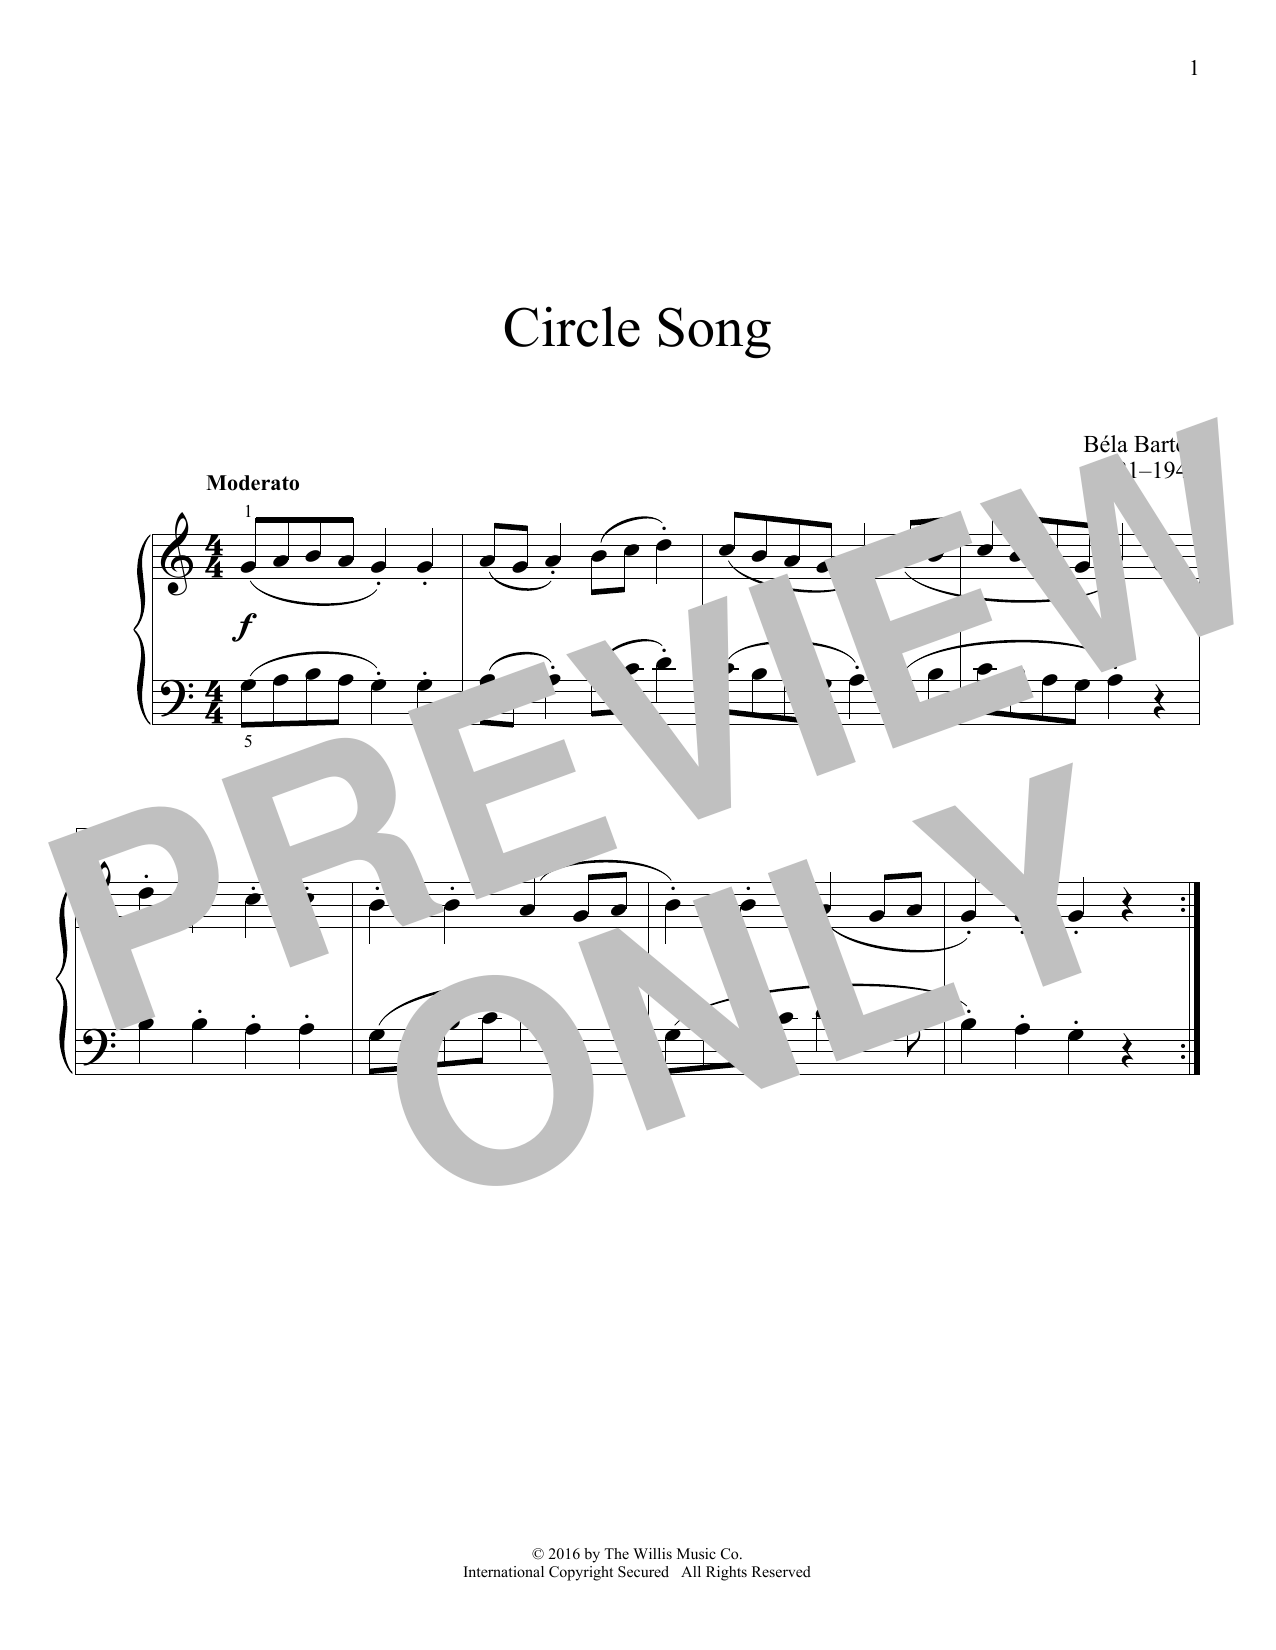 Bela Bartok Circle Song Sheet Music Notes & Chords for Educational Piano - Download or Print PDF